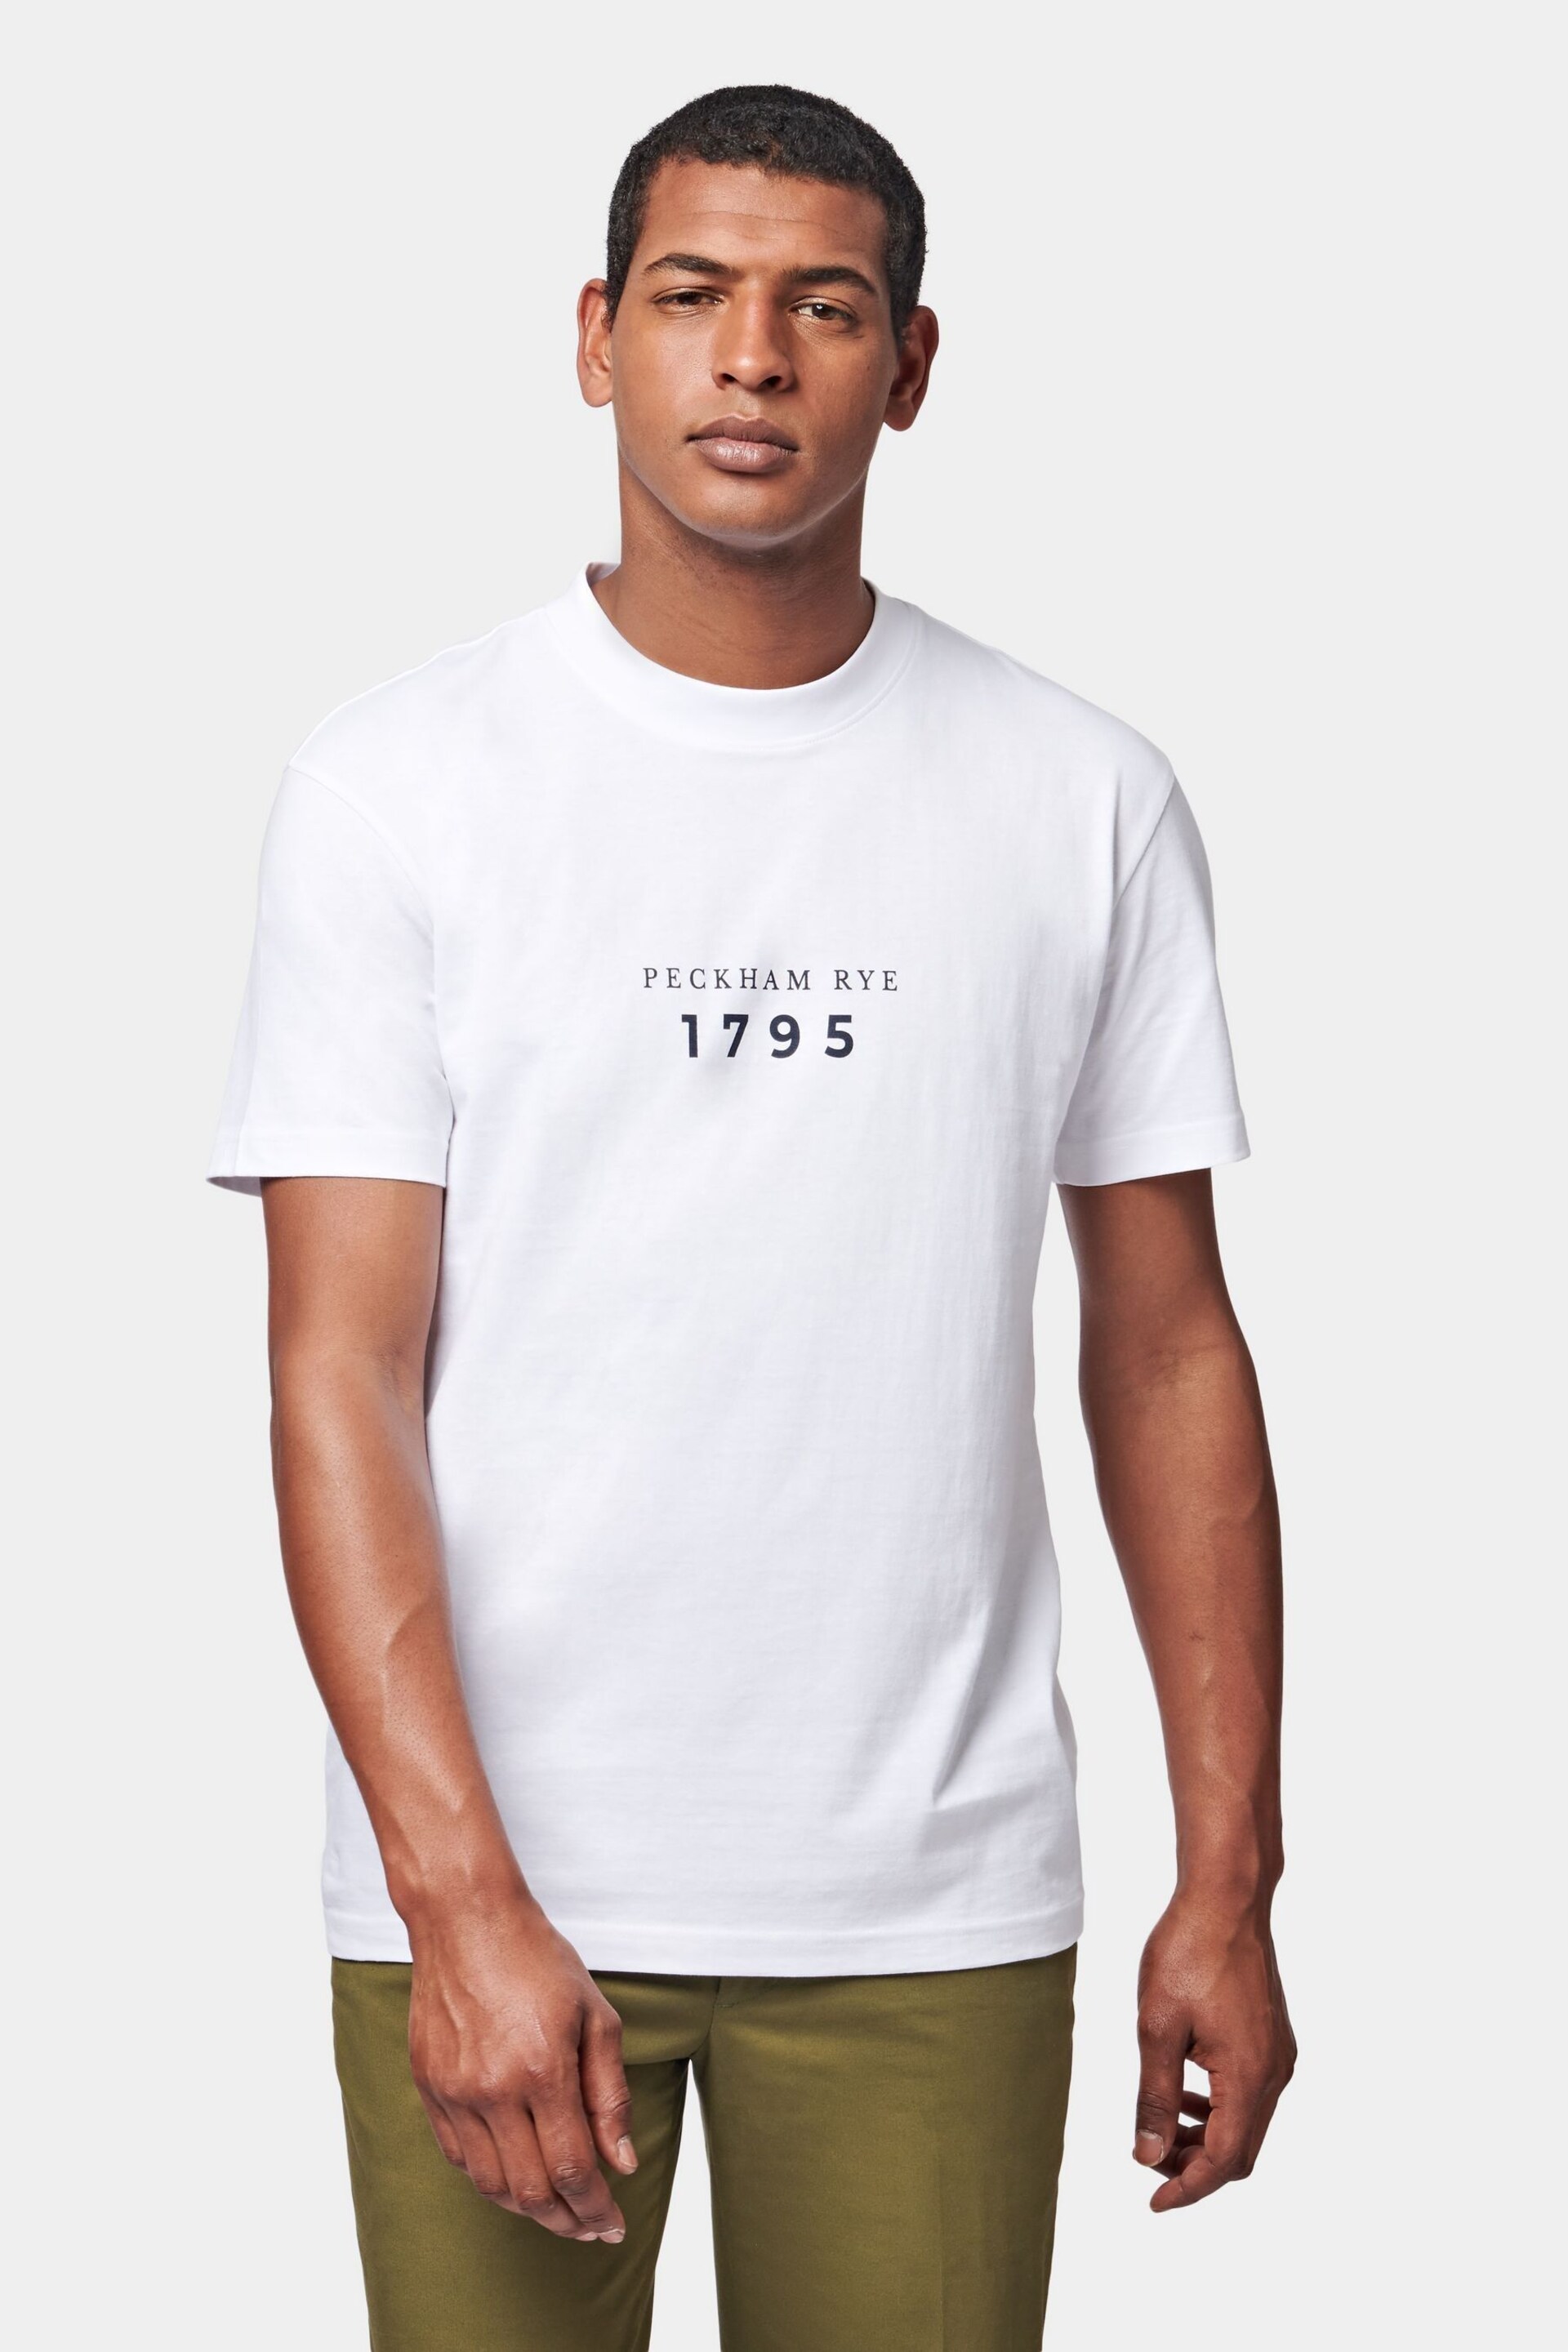 Peckham Rye Printed T-Shirt - Image 1 of 6